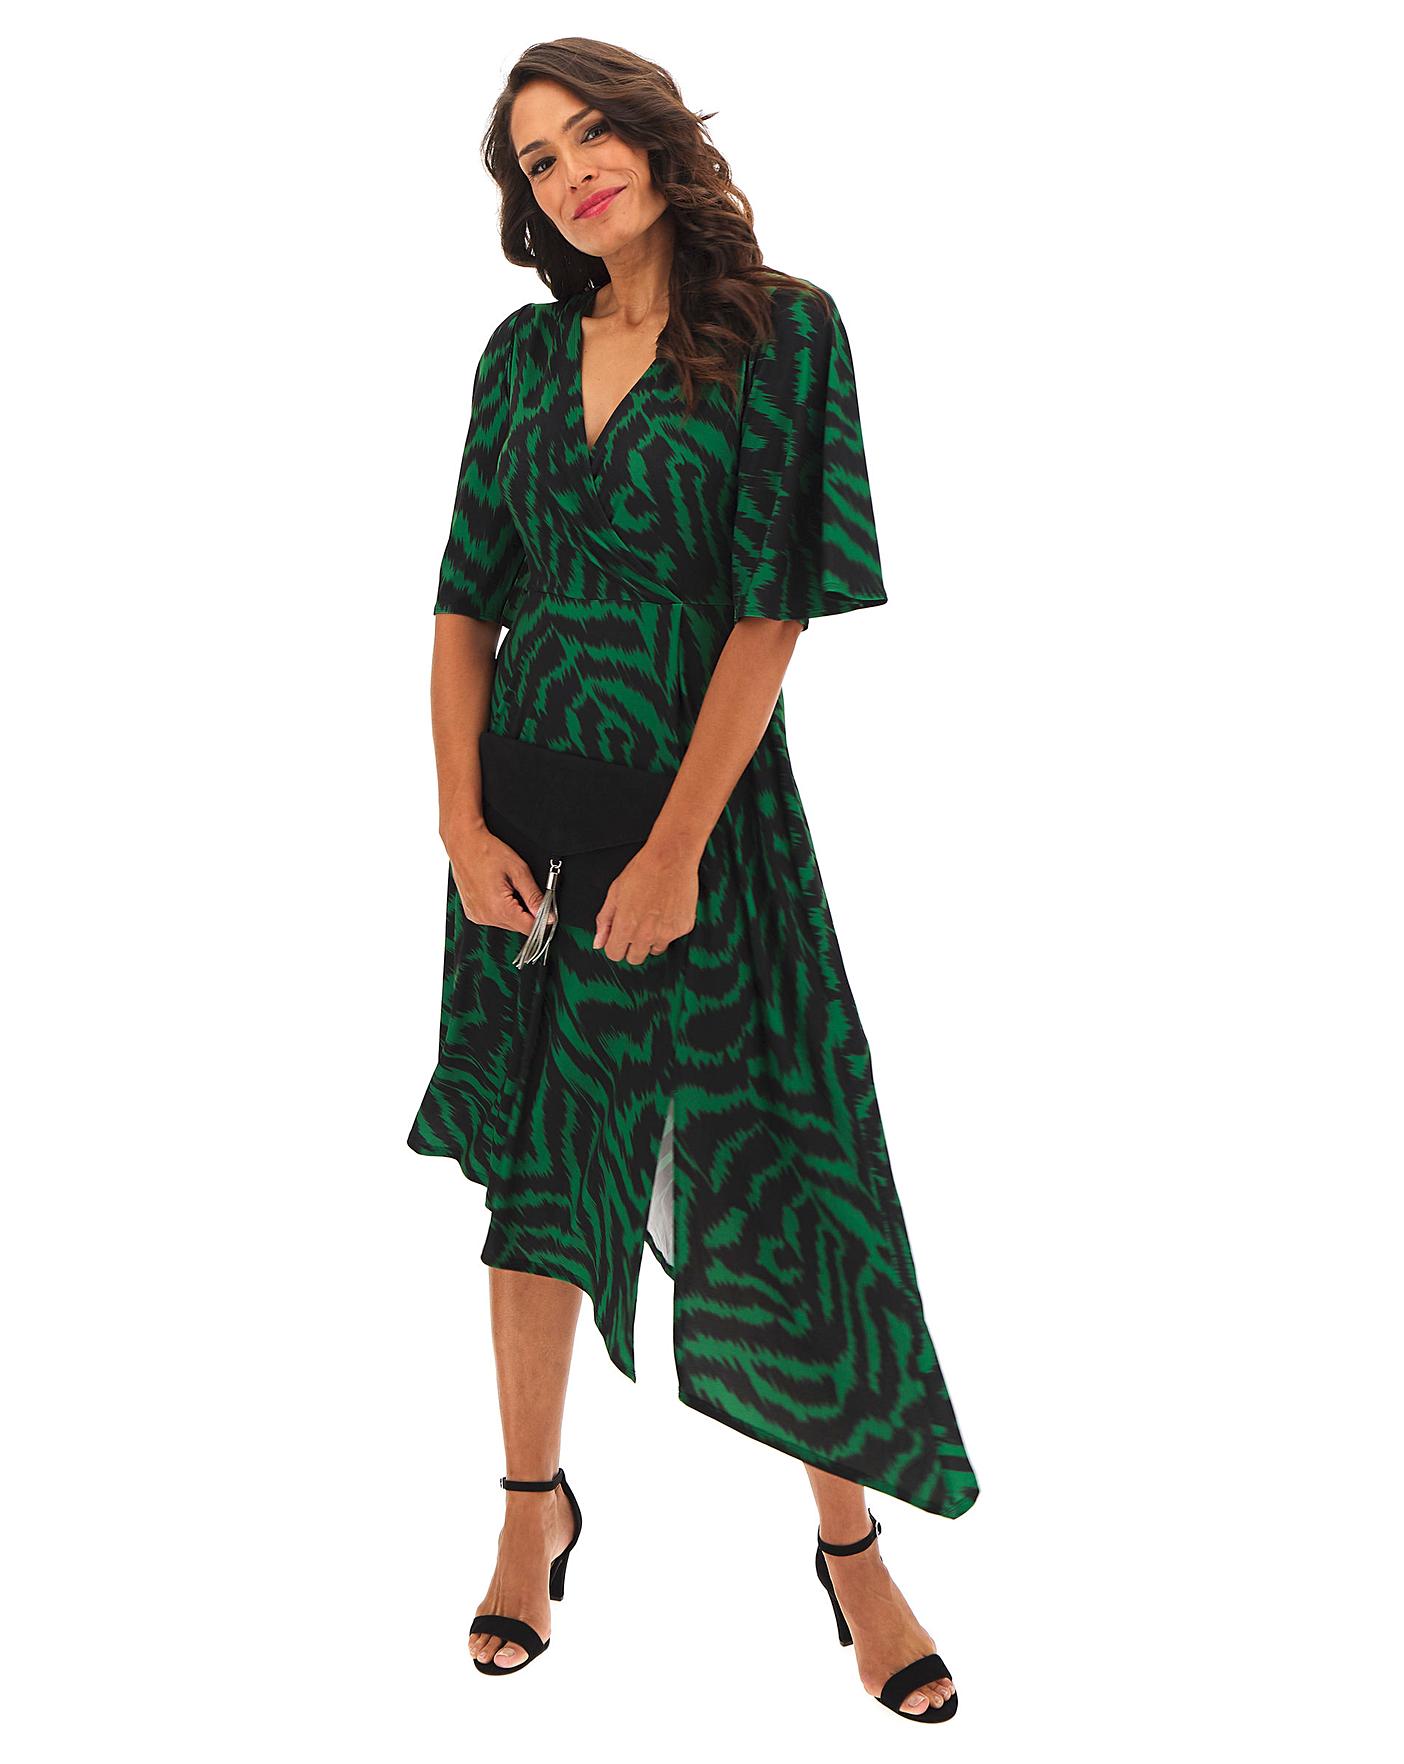 Green Zebra Dress Sale, 56% OFF | lagence.tv